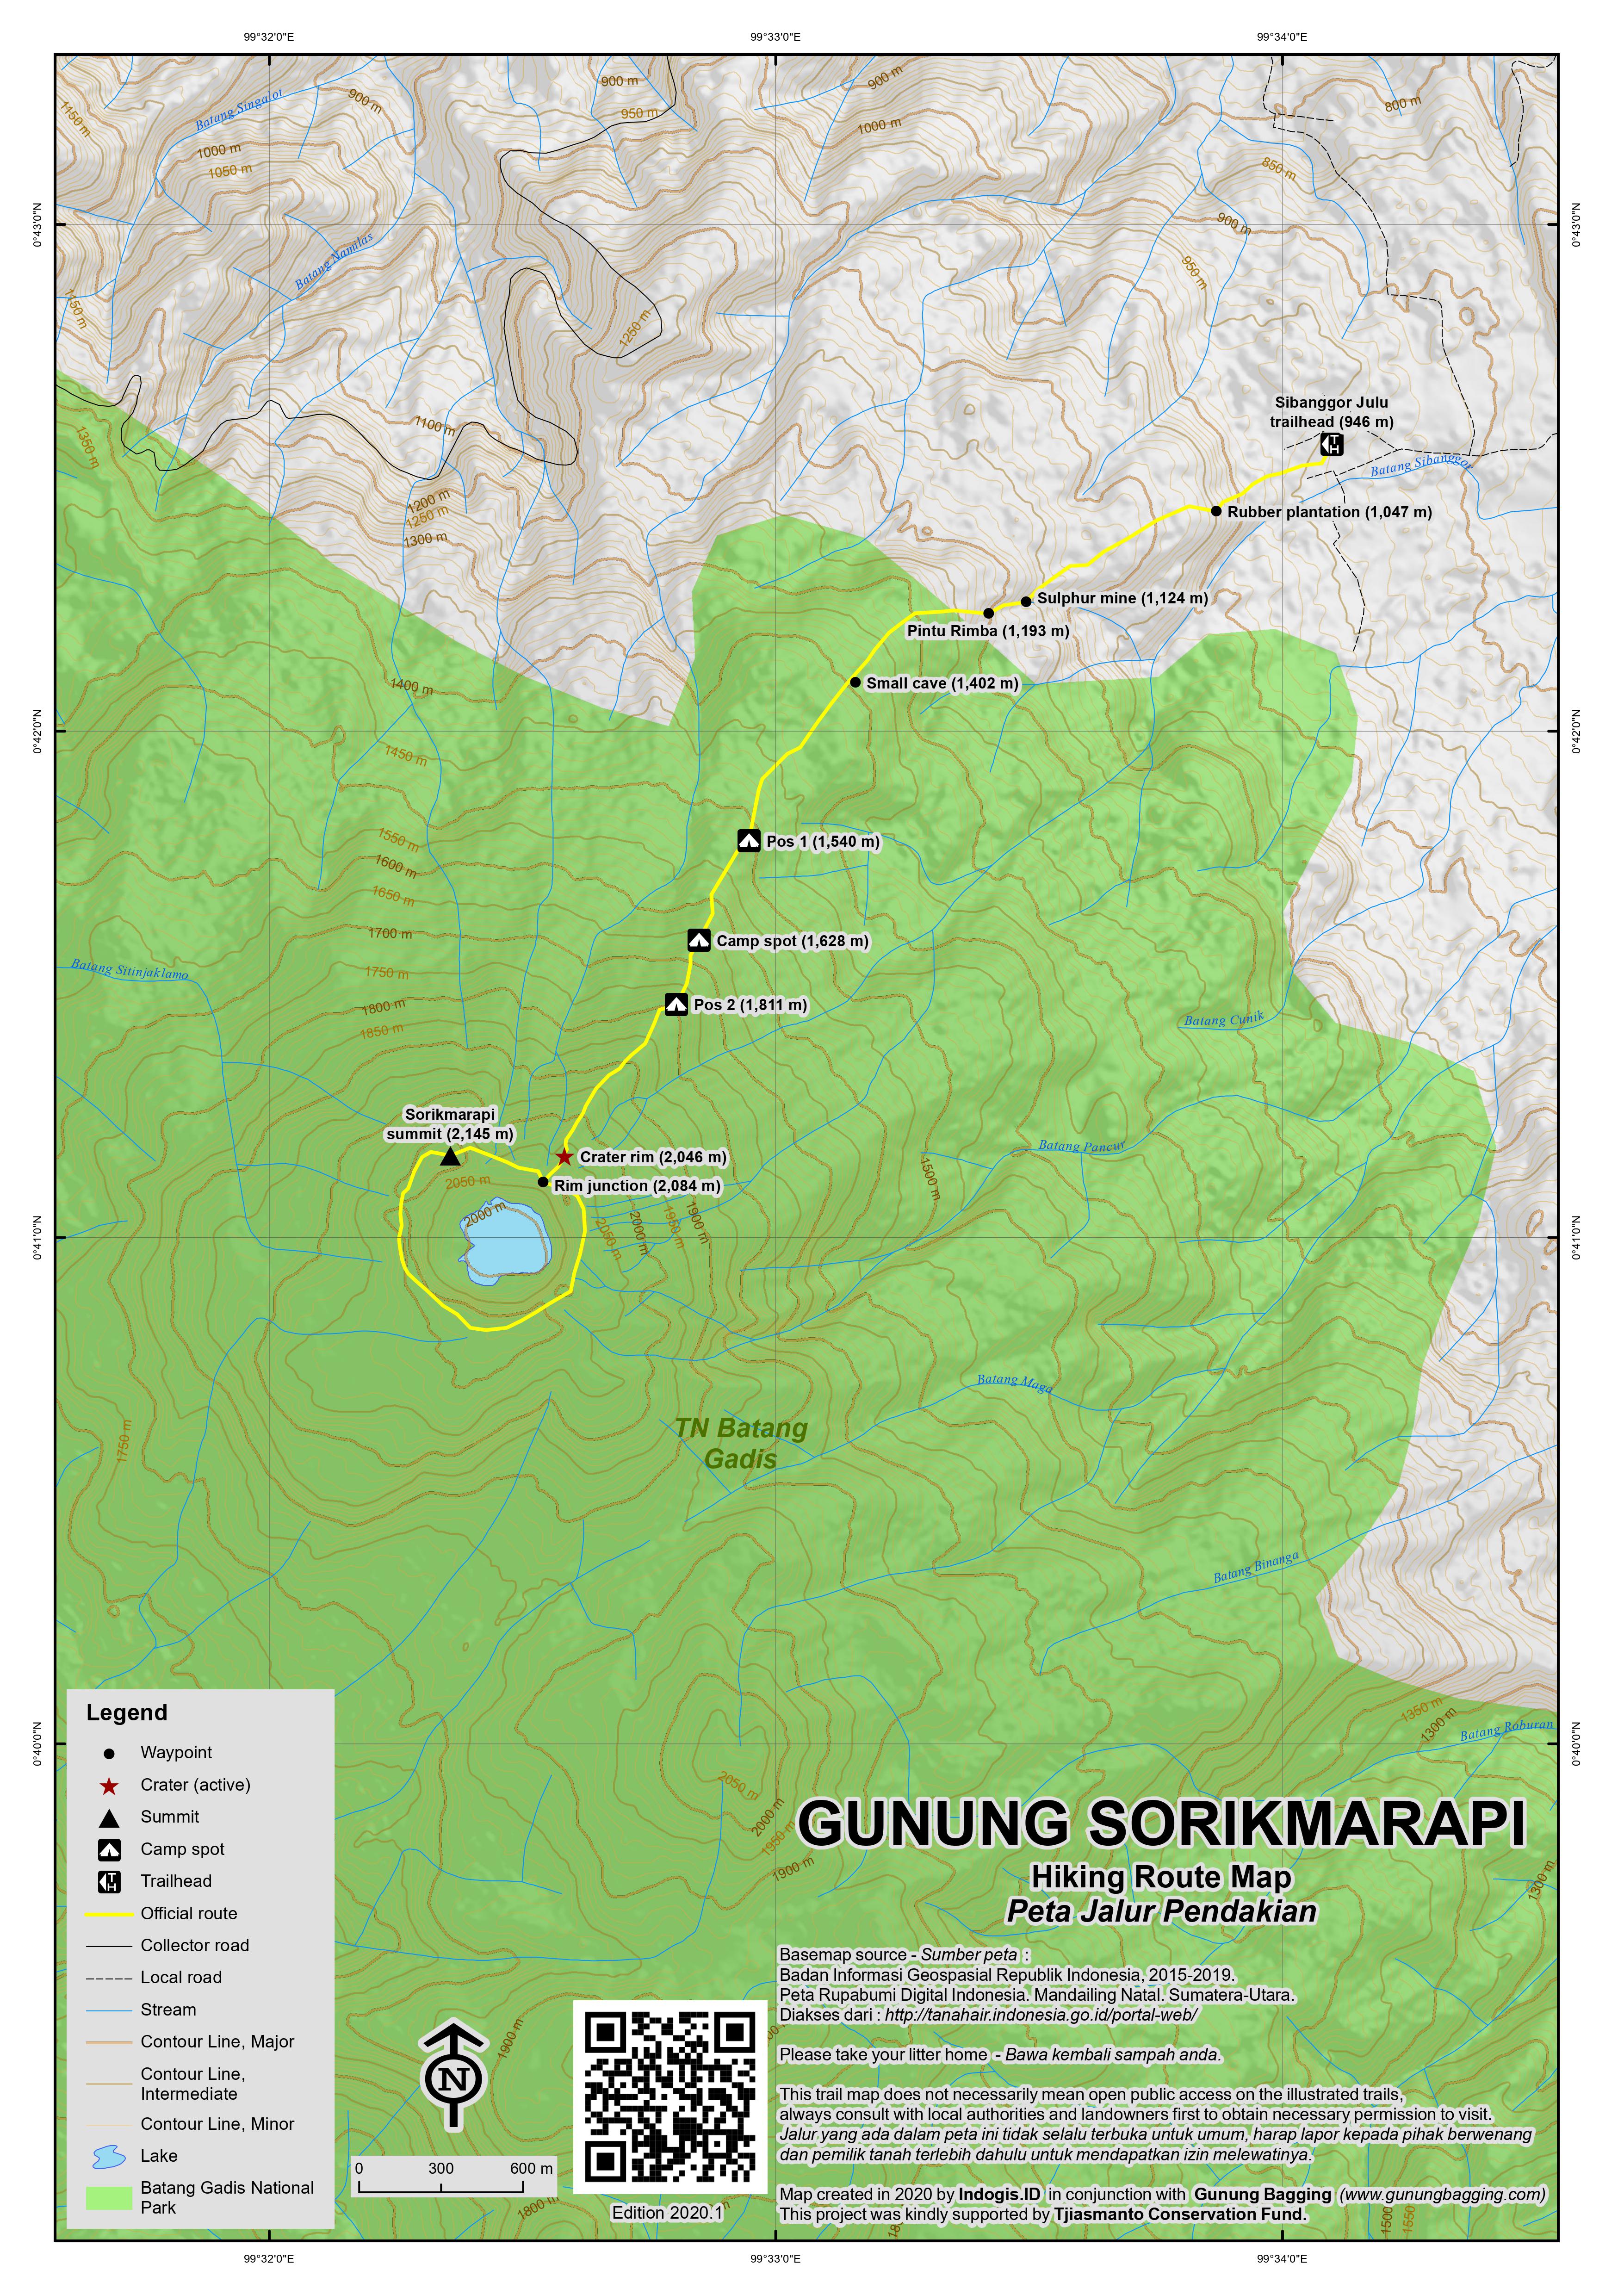 Peta Jalur Pendakian Gunung Sorikmarapi